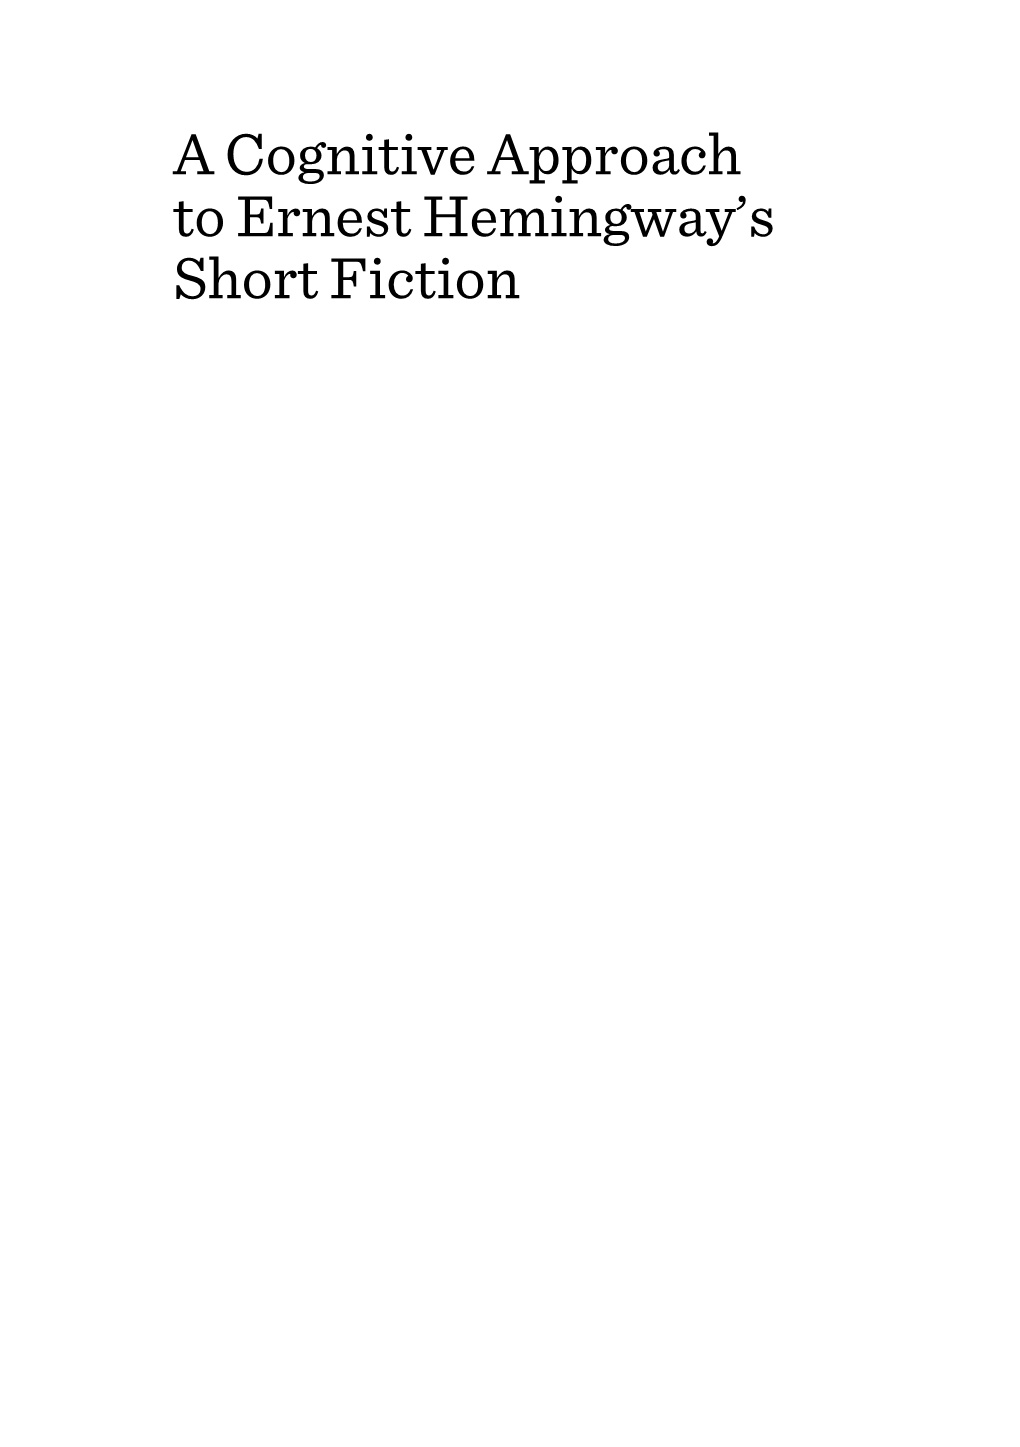 A Cognitive Approach to Ernest Hemingway's Short Fiction